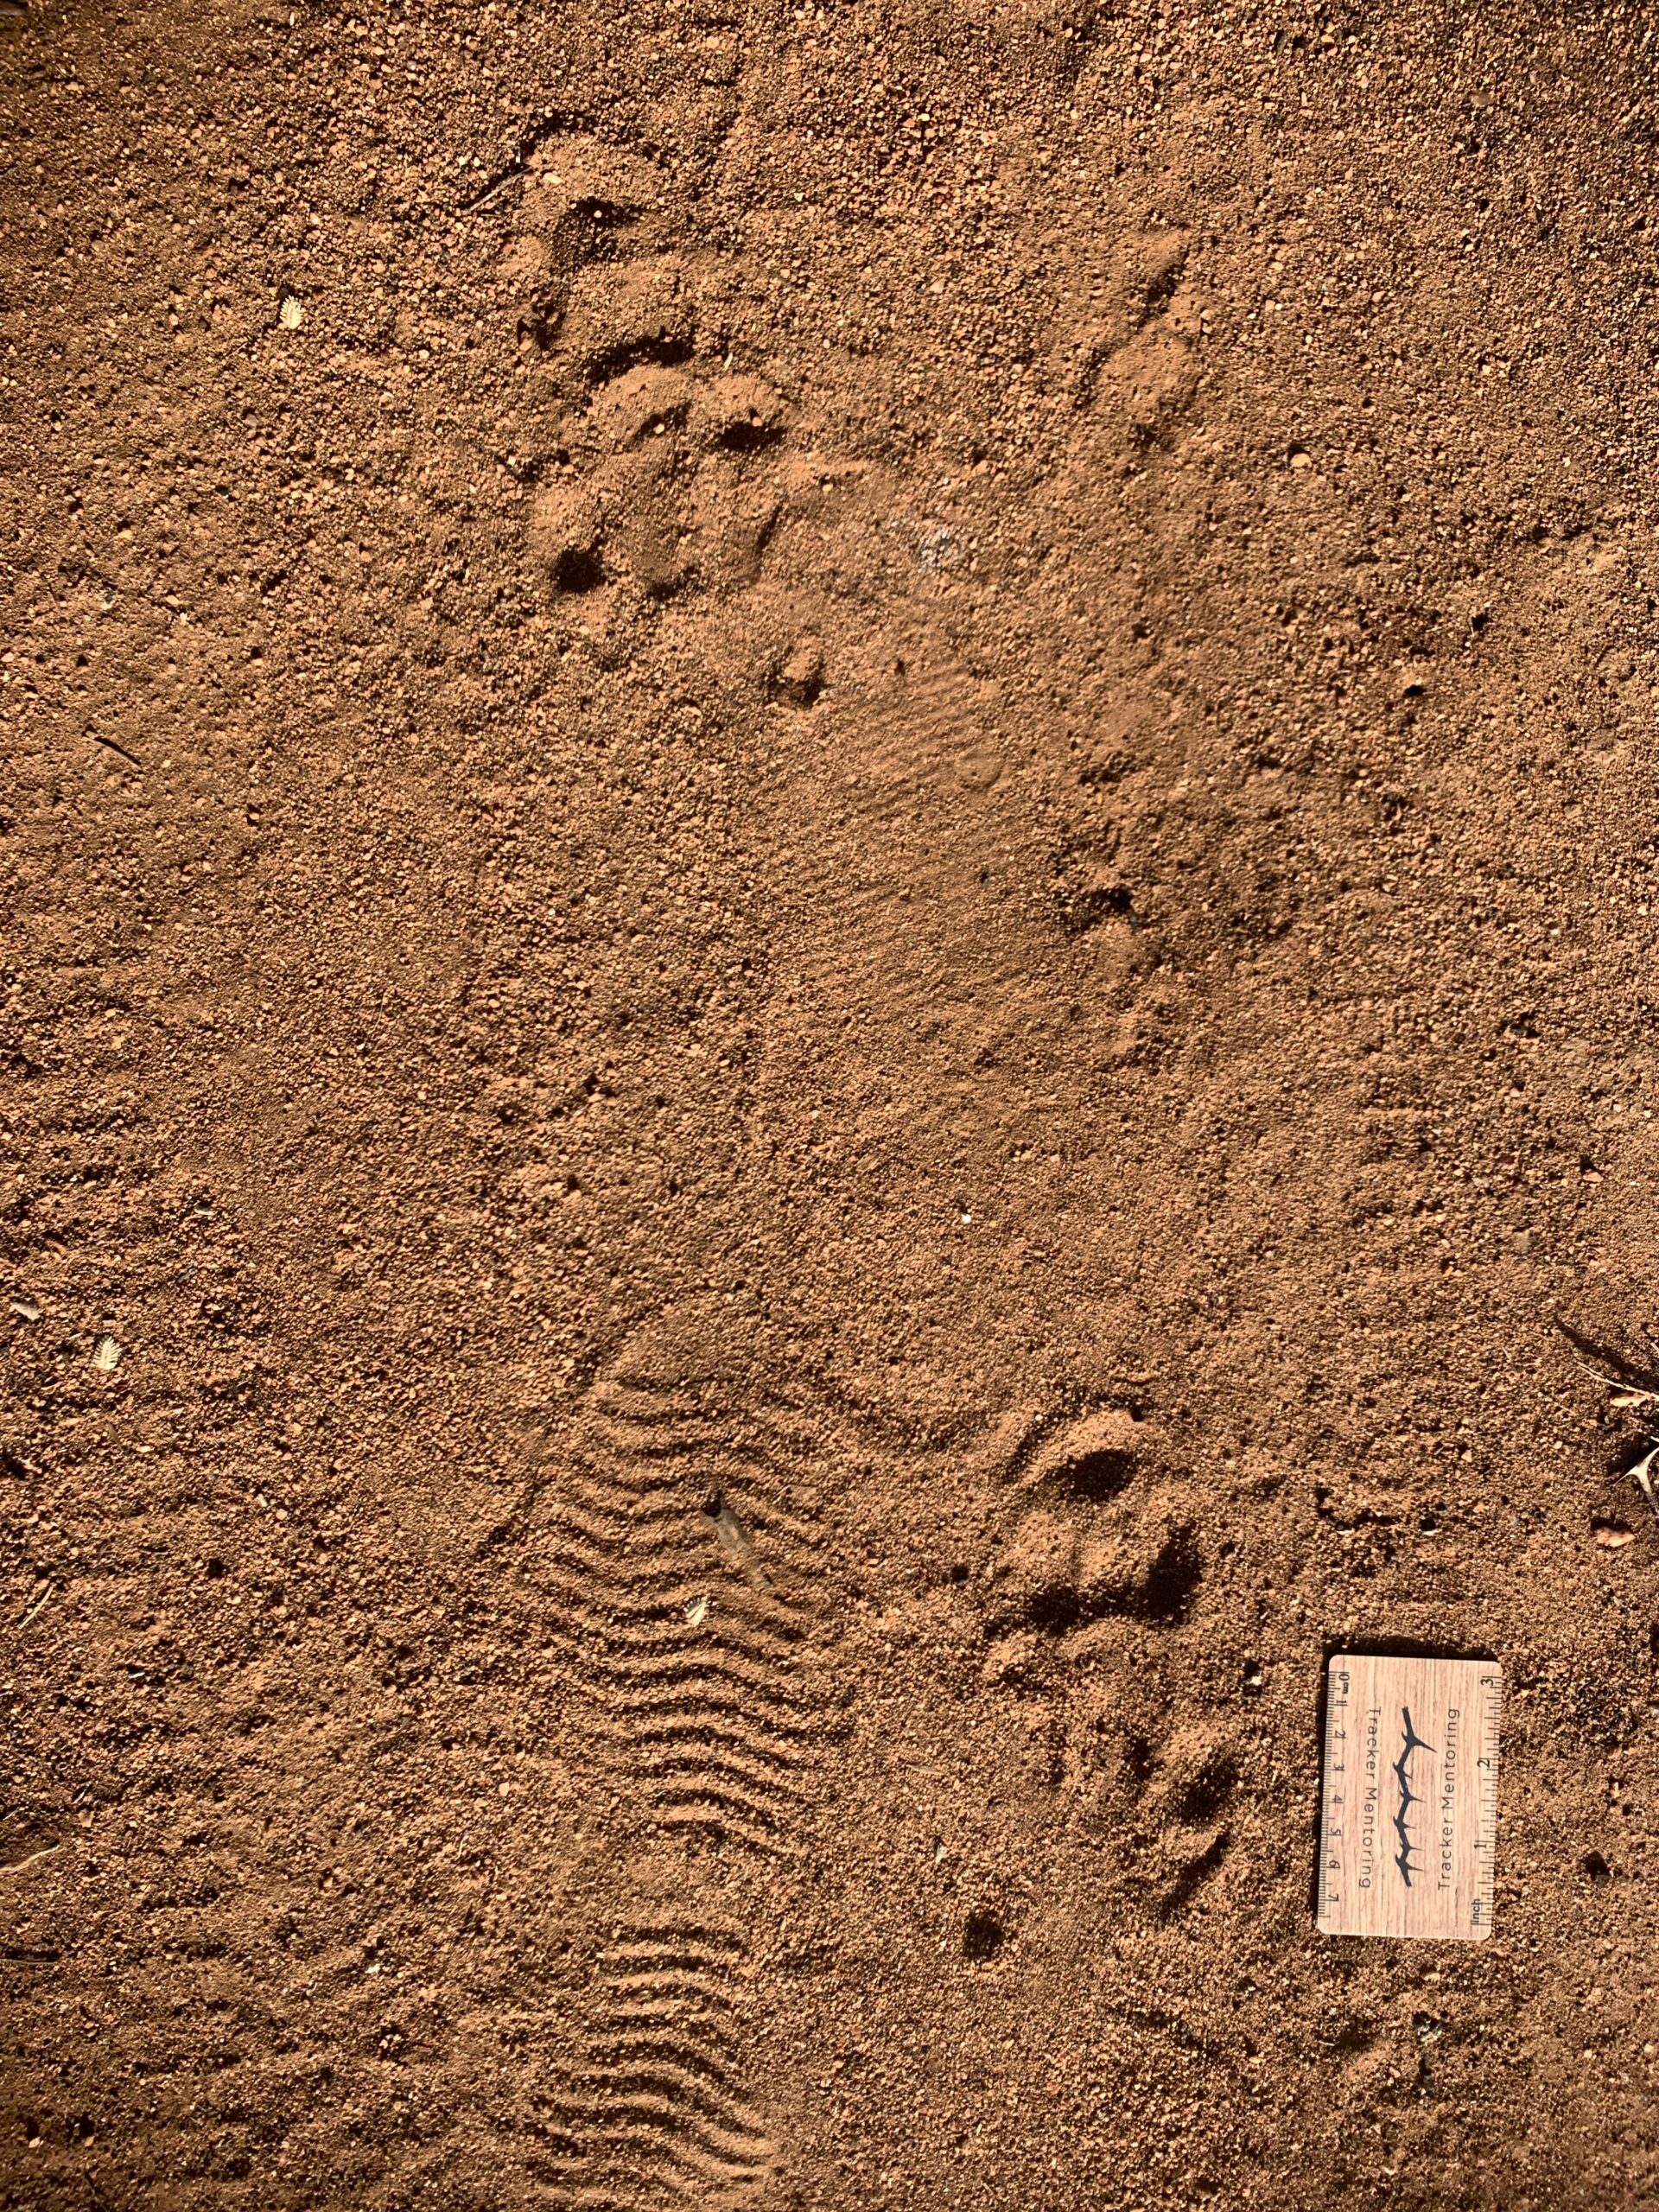 Aardvark tracks, mammal, Greater Kruger region, South Africa, Africa